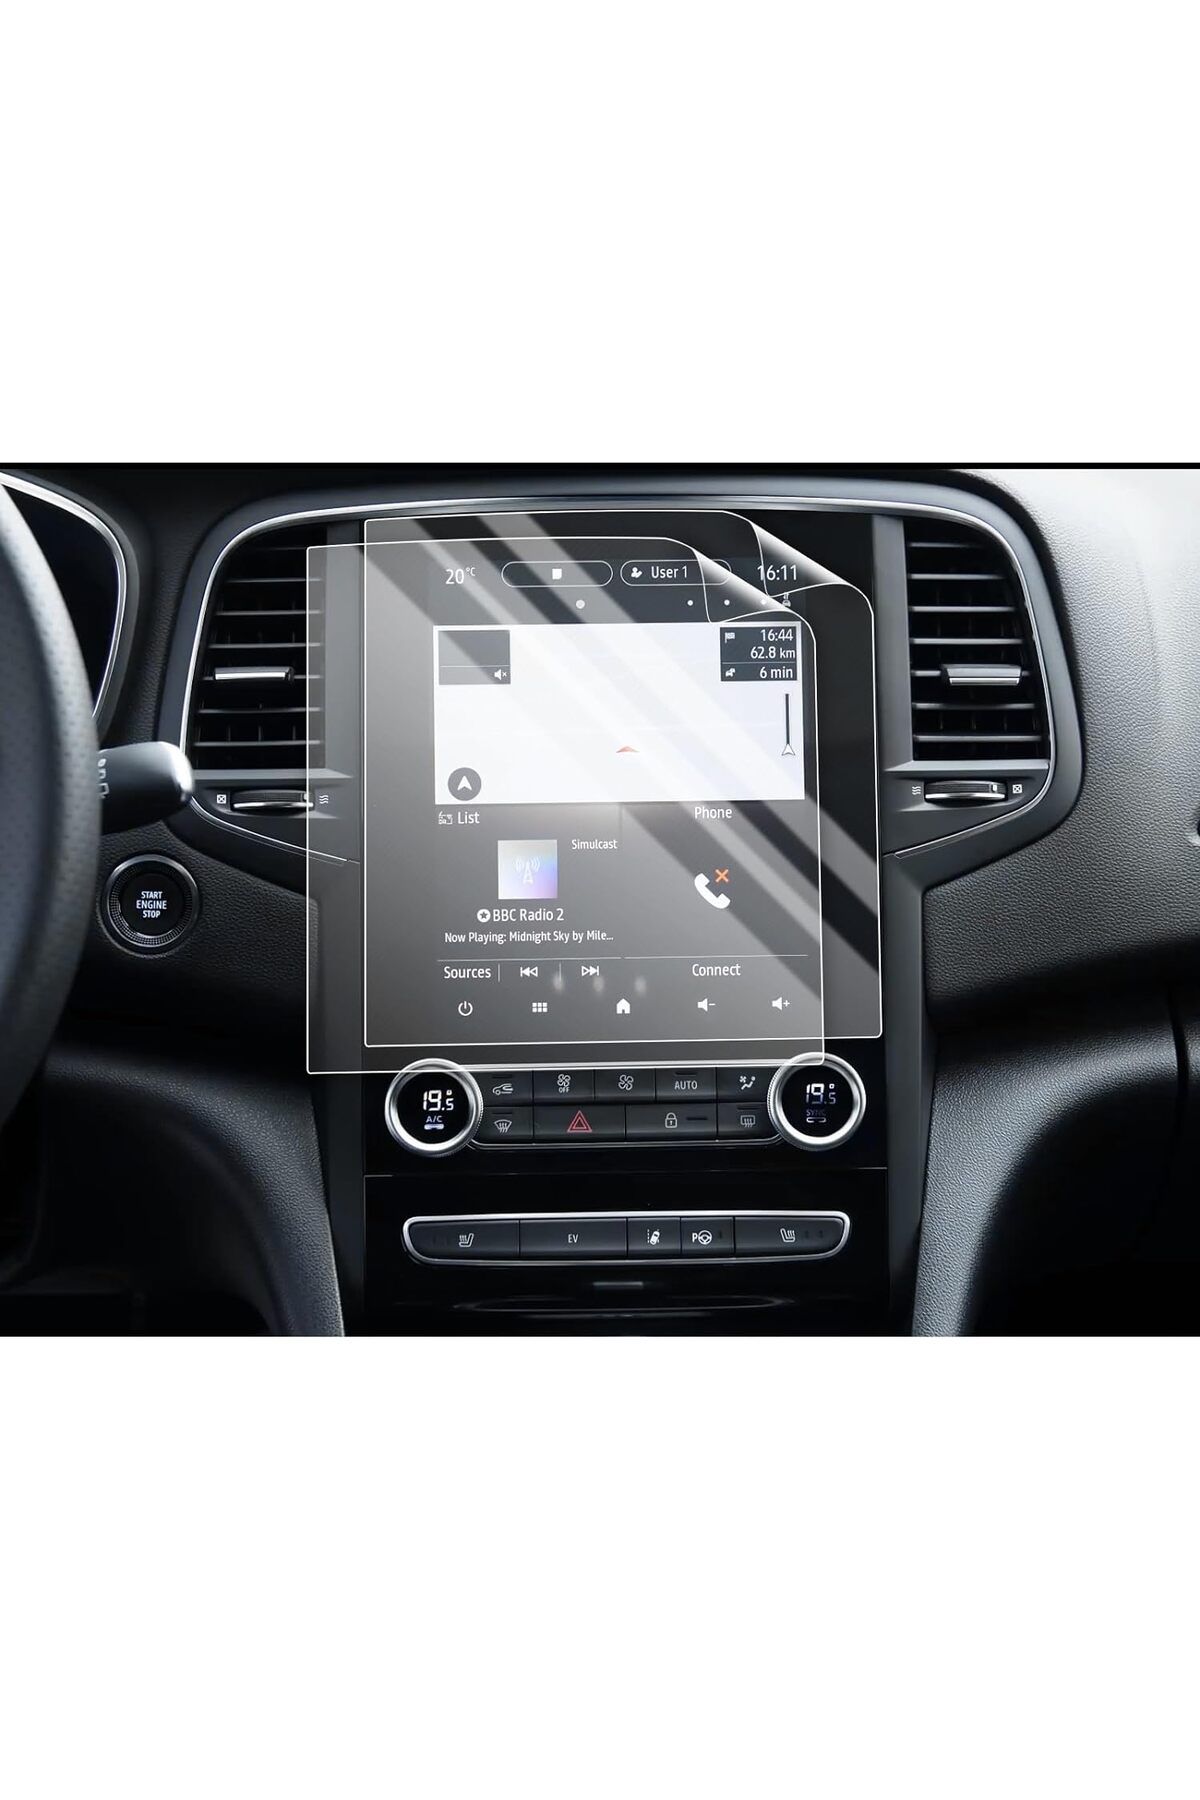 Ecr Mobile Navimex Tesla Renault Megane 4 9.7 inç Navigasyon ve Dijital Gösterge Panel Uyumlu 9H Nano Ekran Kor